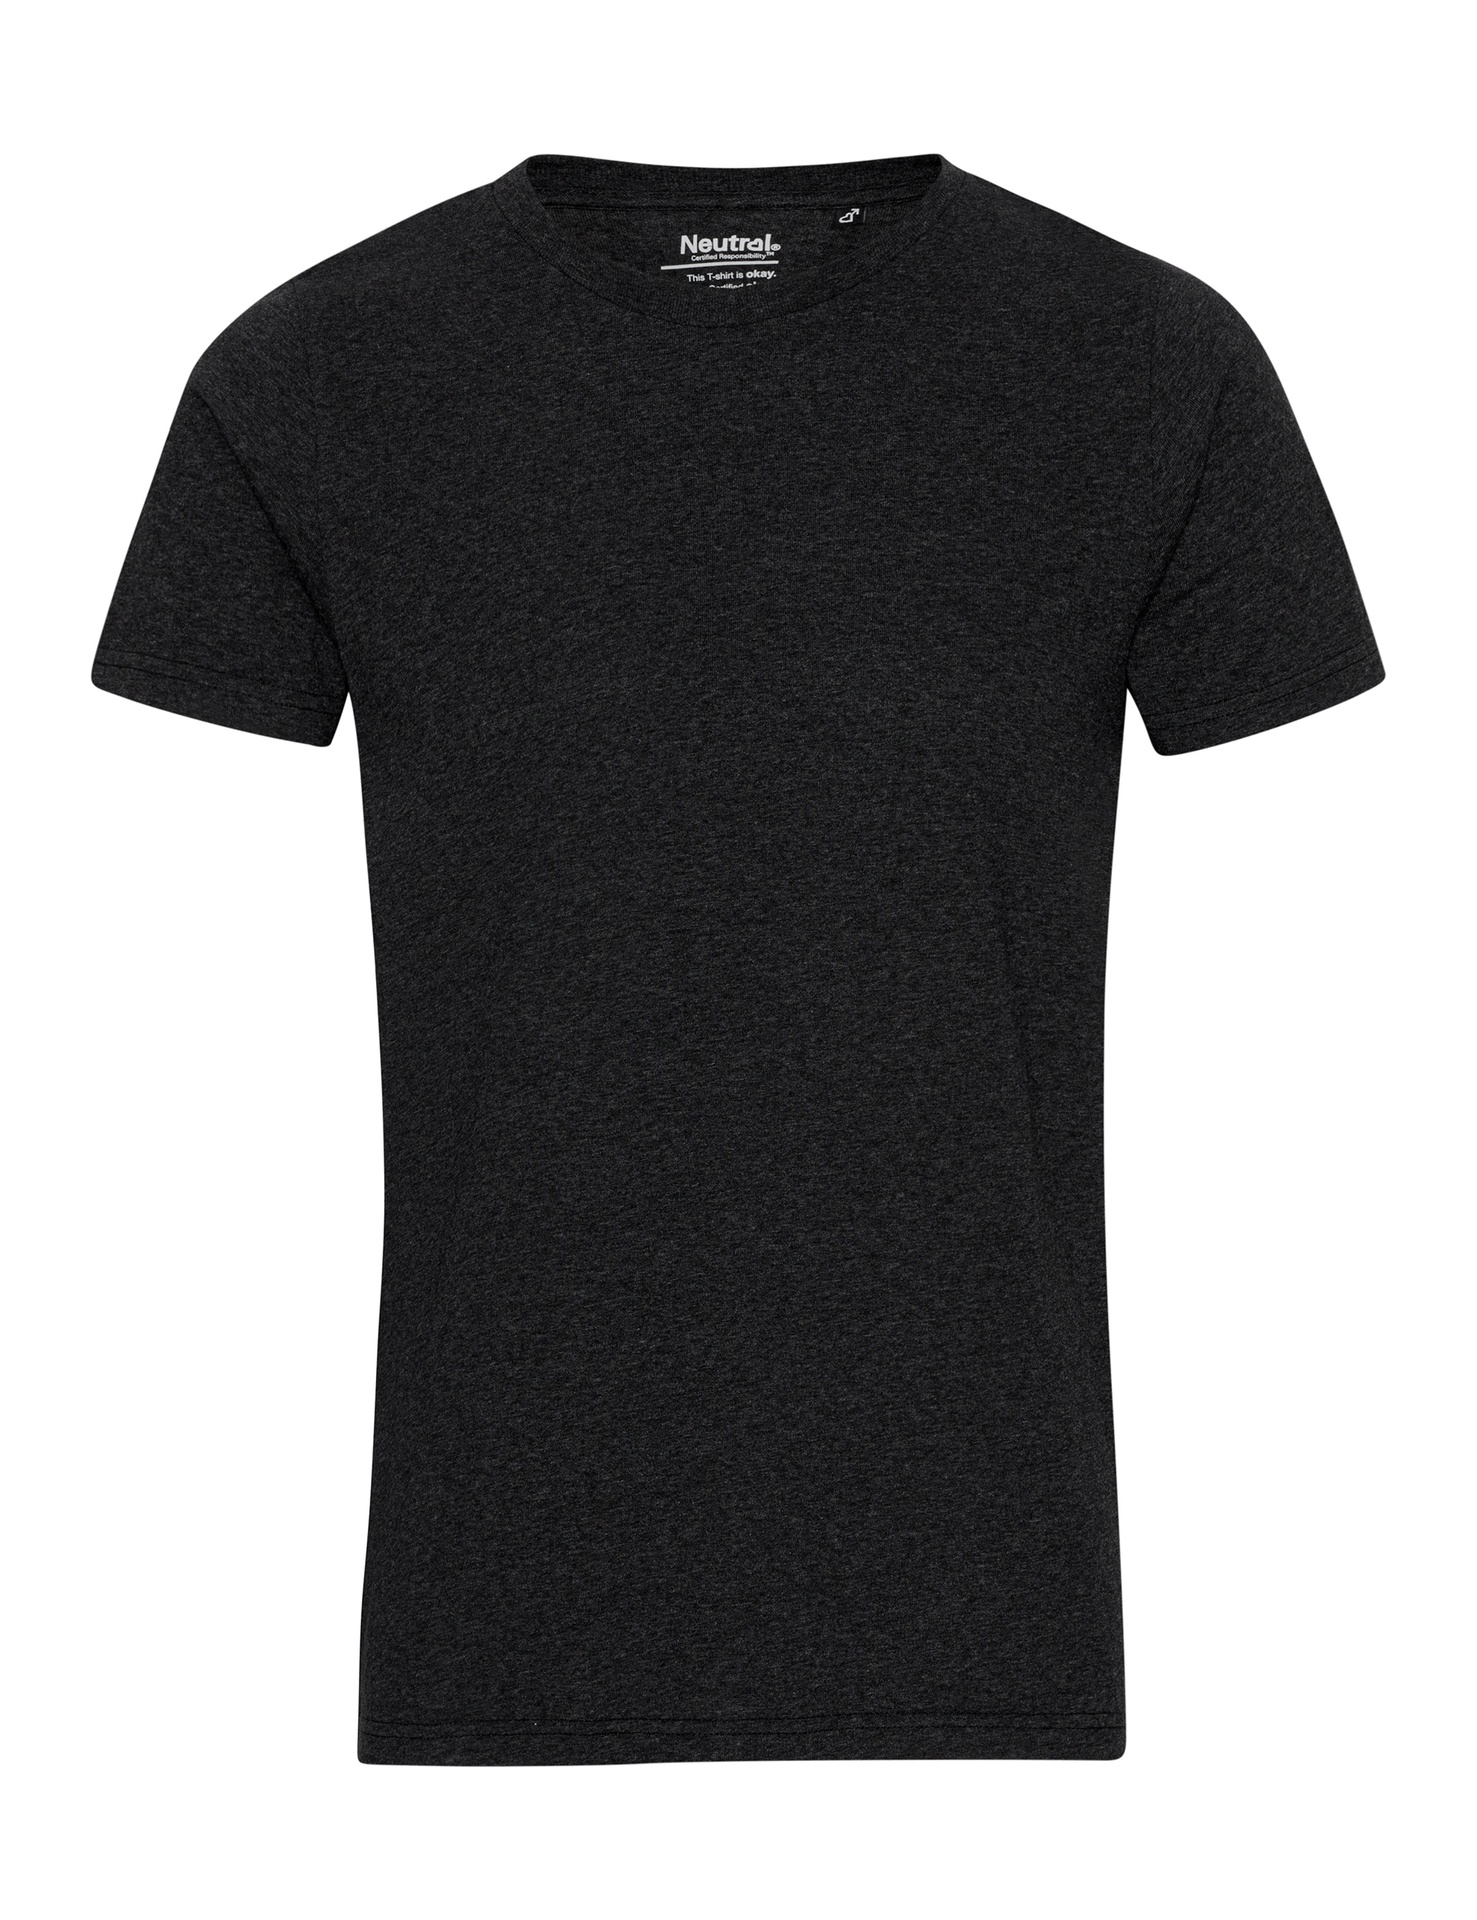 [PR/01026] Recycled Cotton T-Shirt (Black Melange 02, XS)